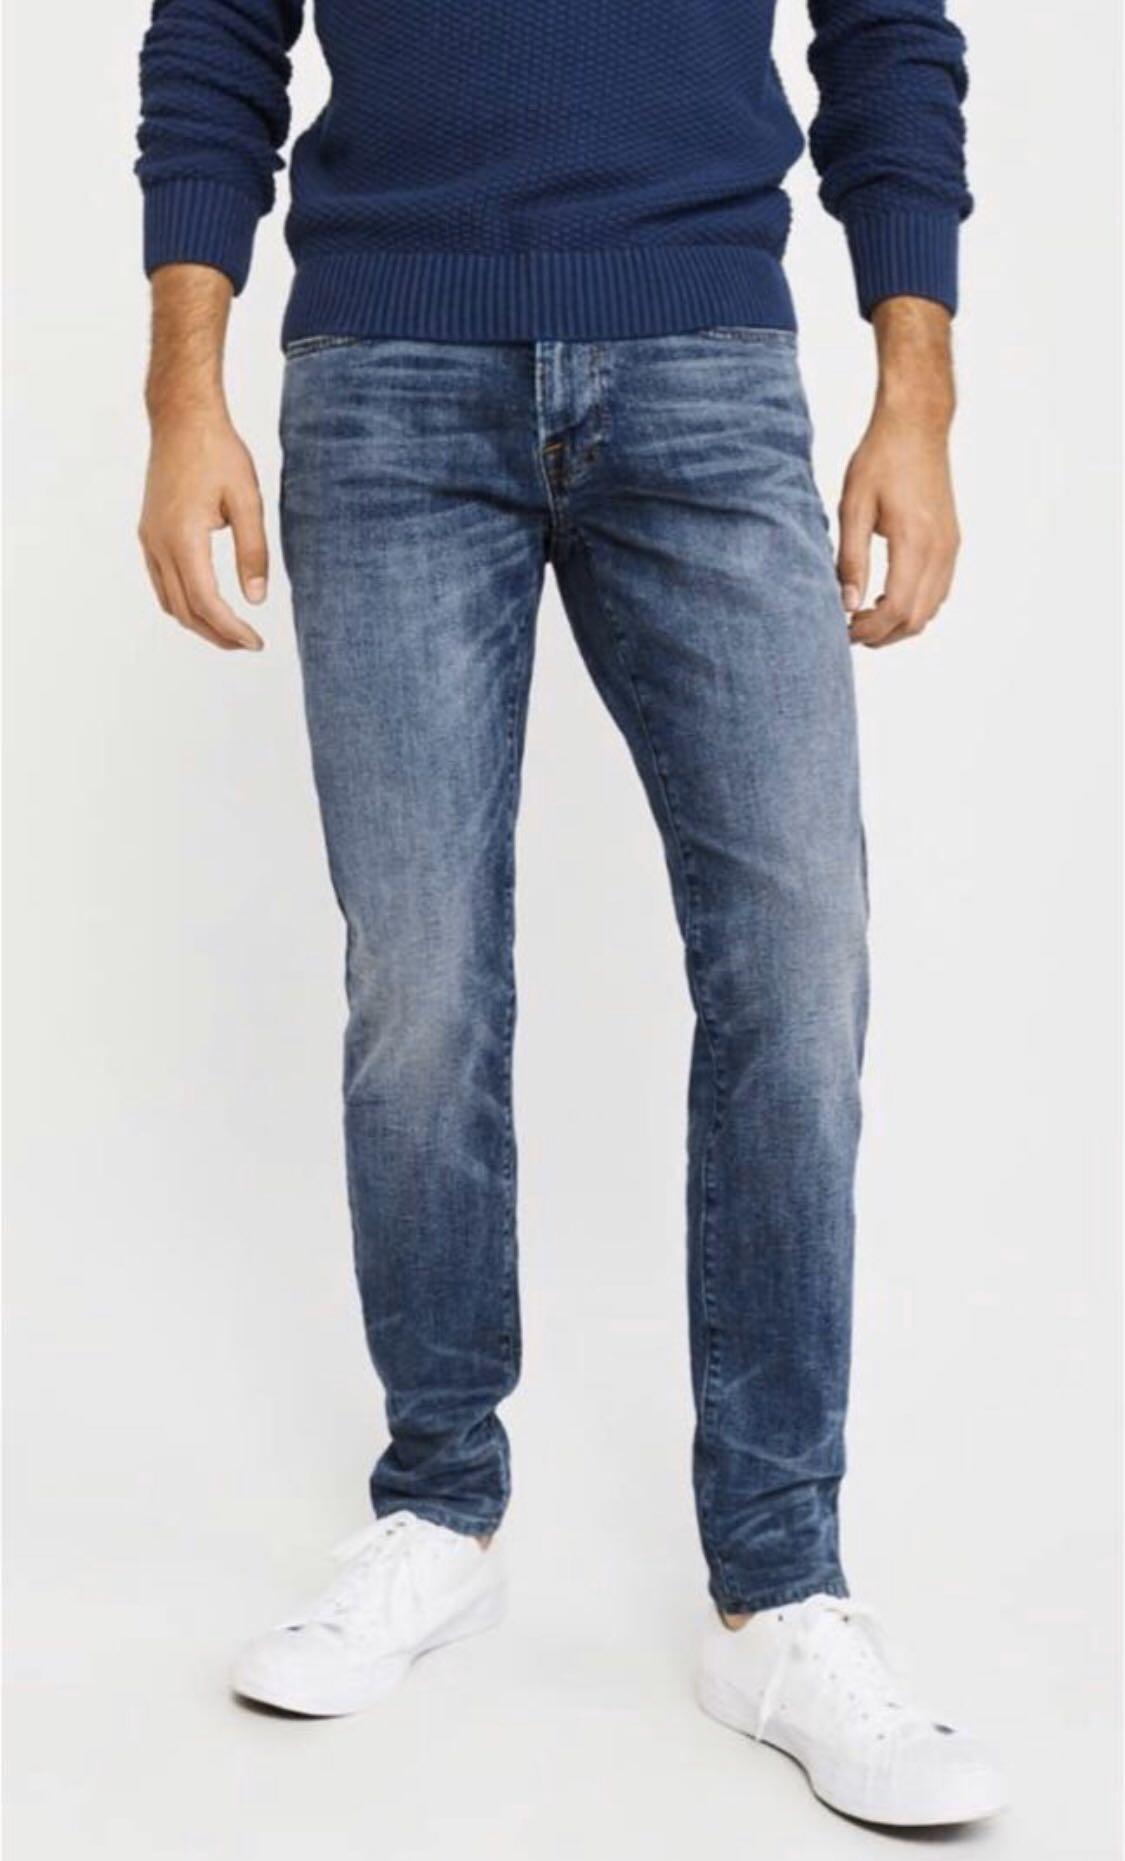 a&f skinny jeans mens